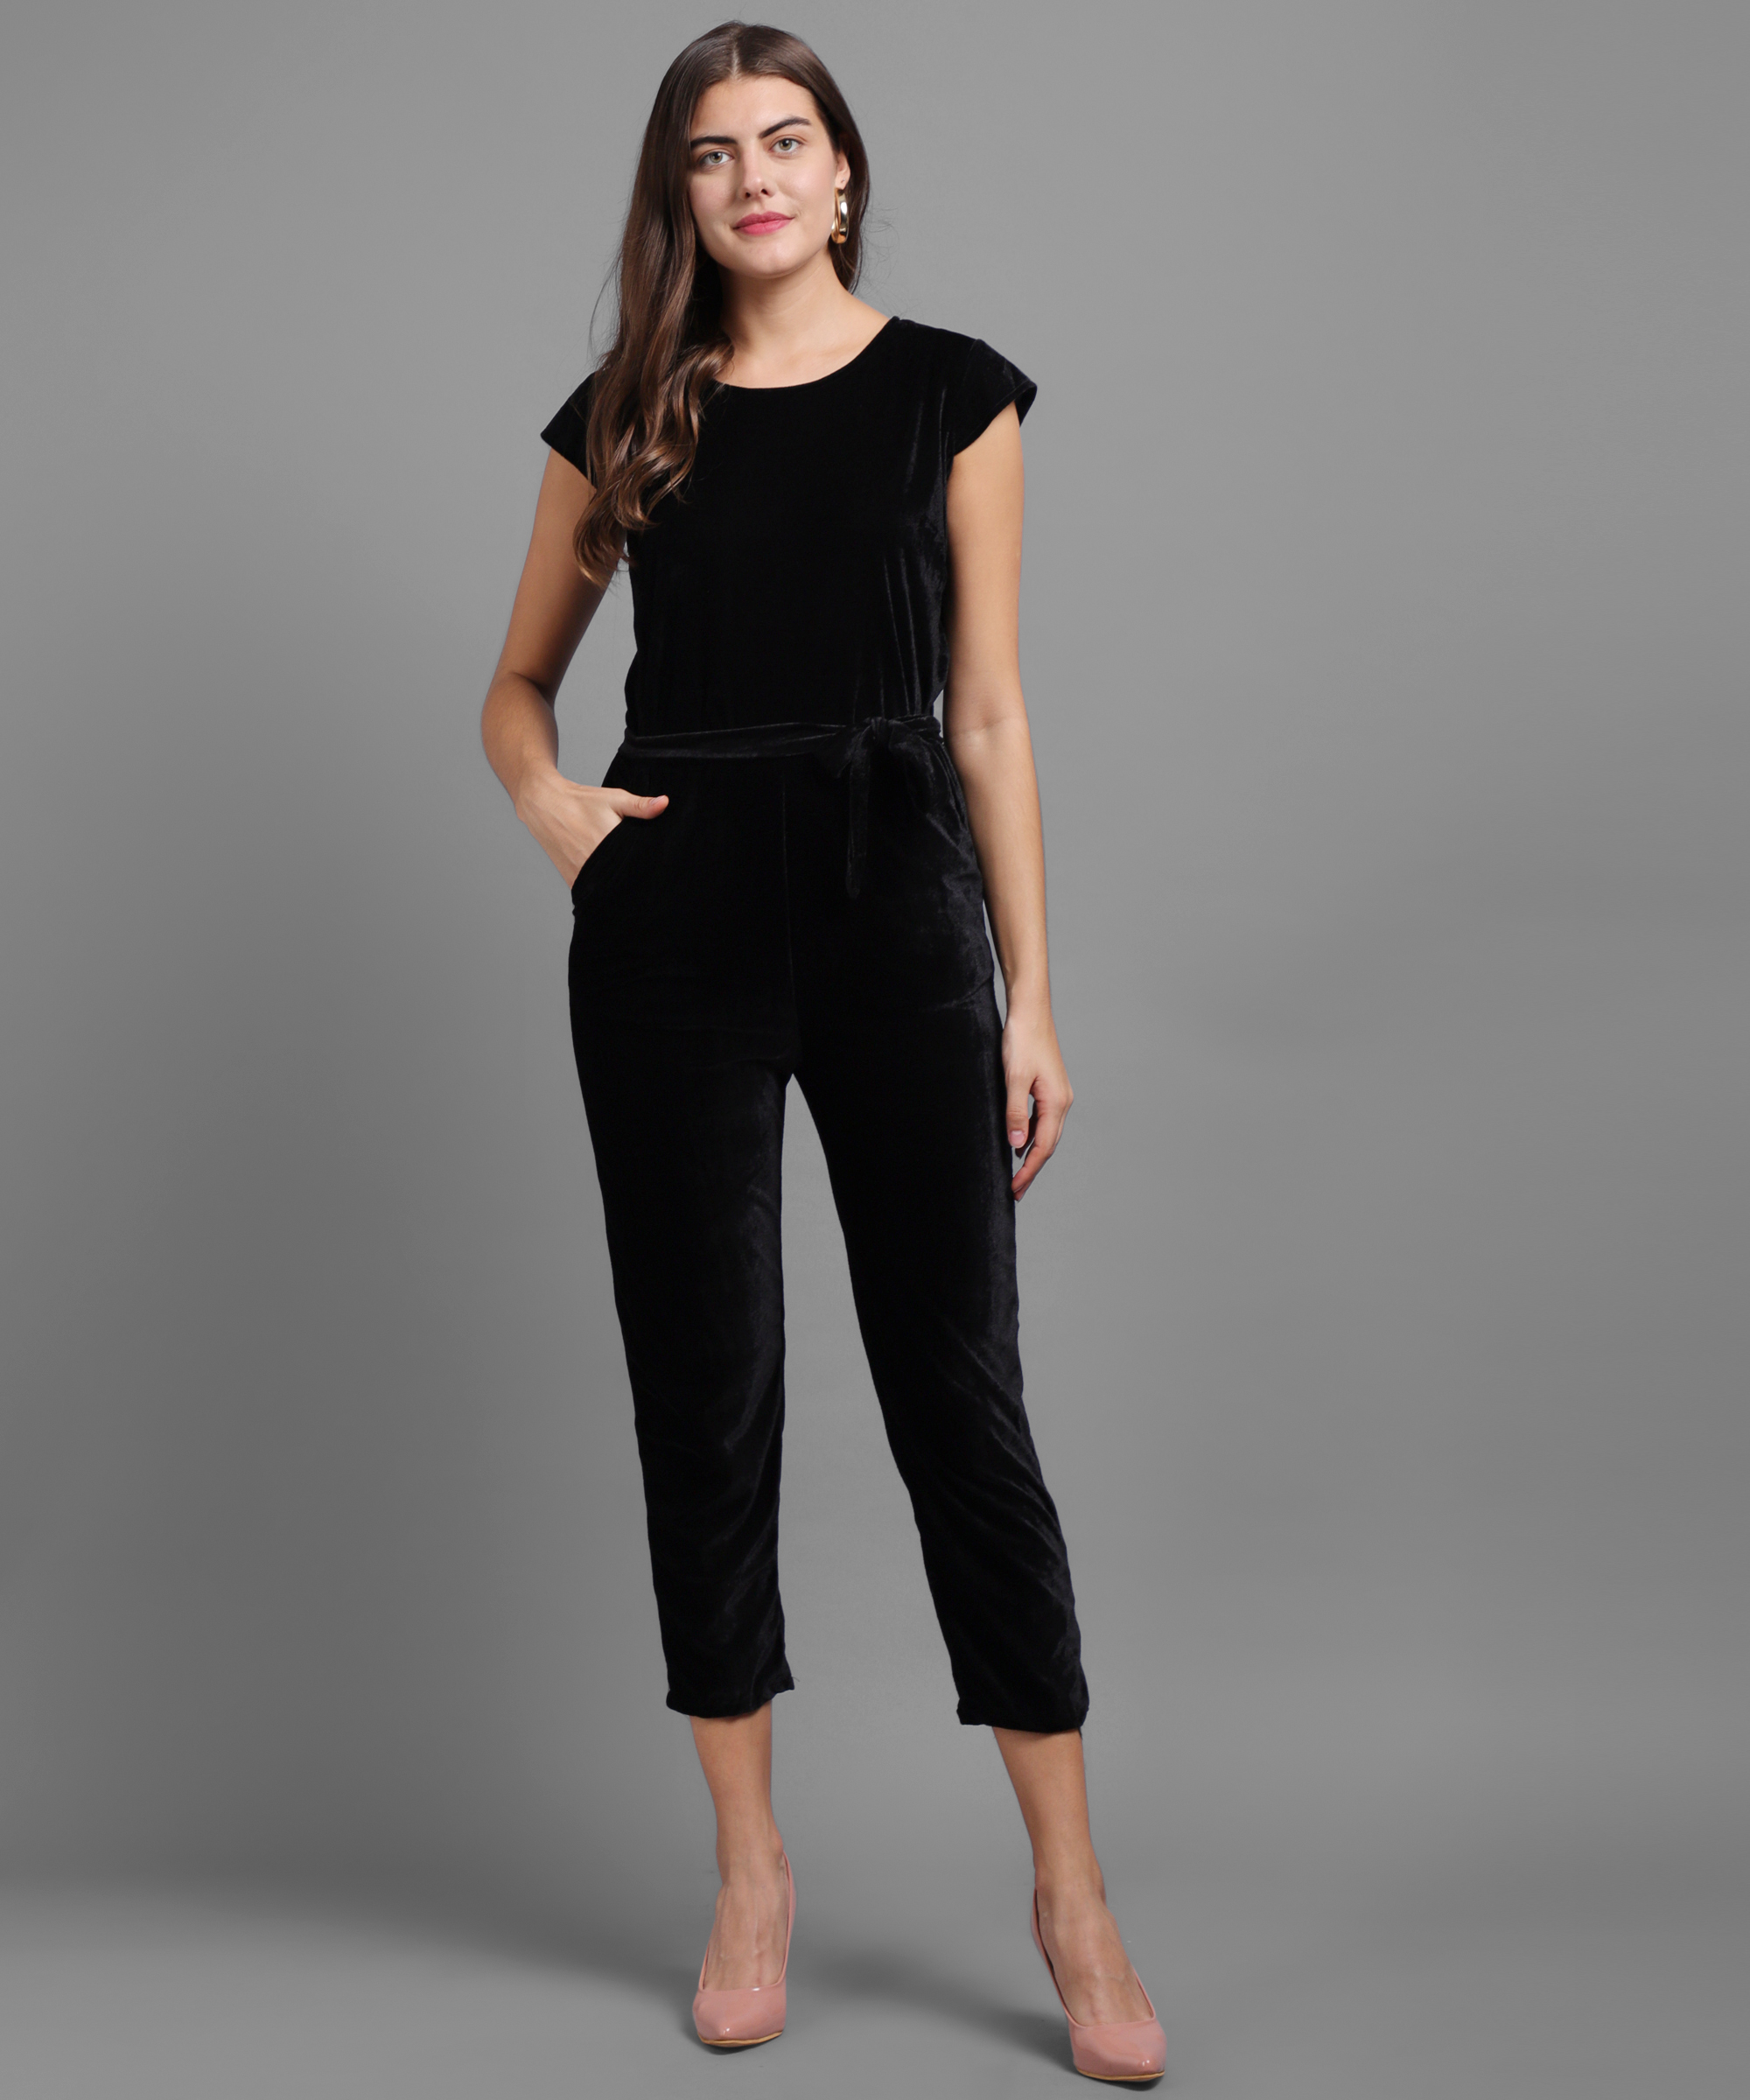 Buy Vivient Women Black Plain Velvet Jumpsuit Online - Get 77% Off